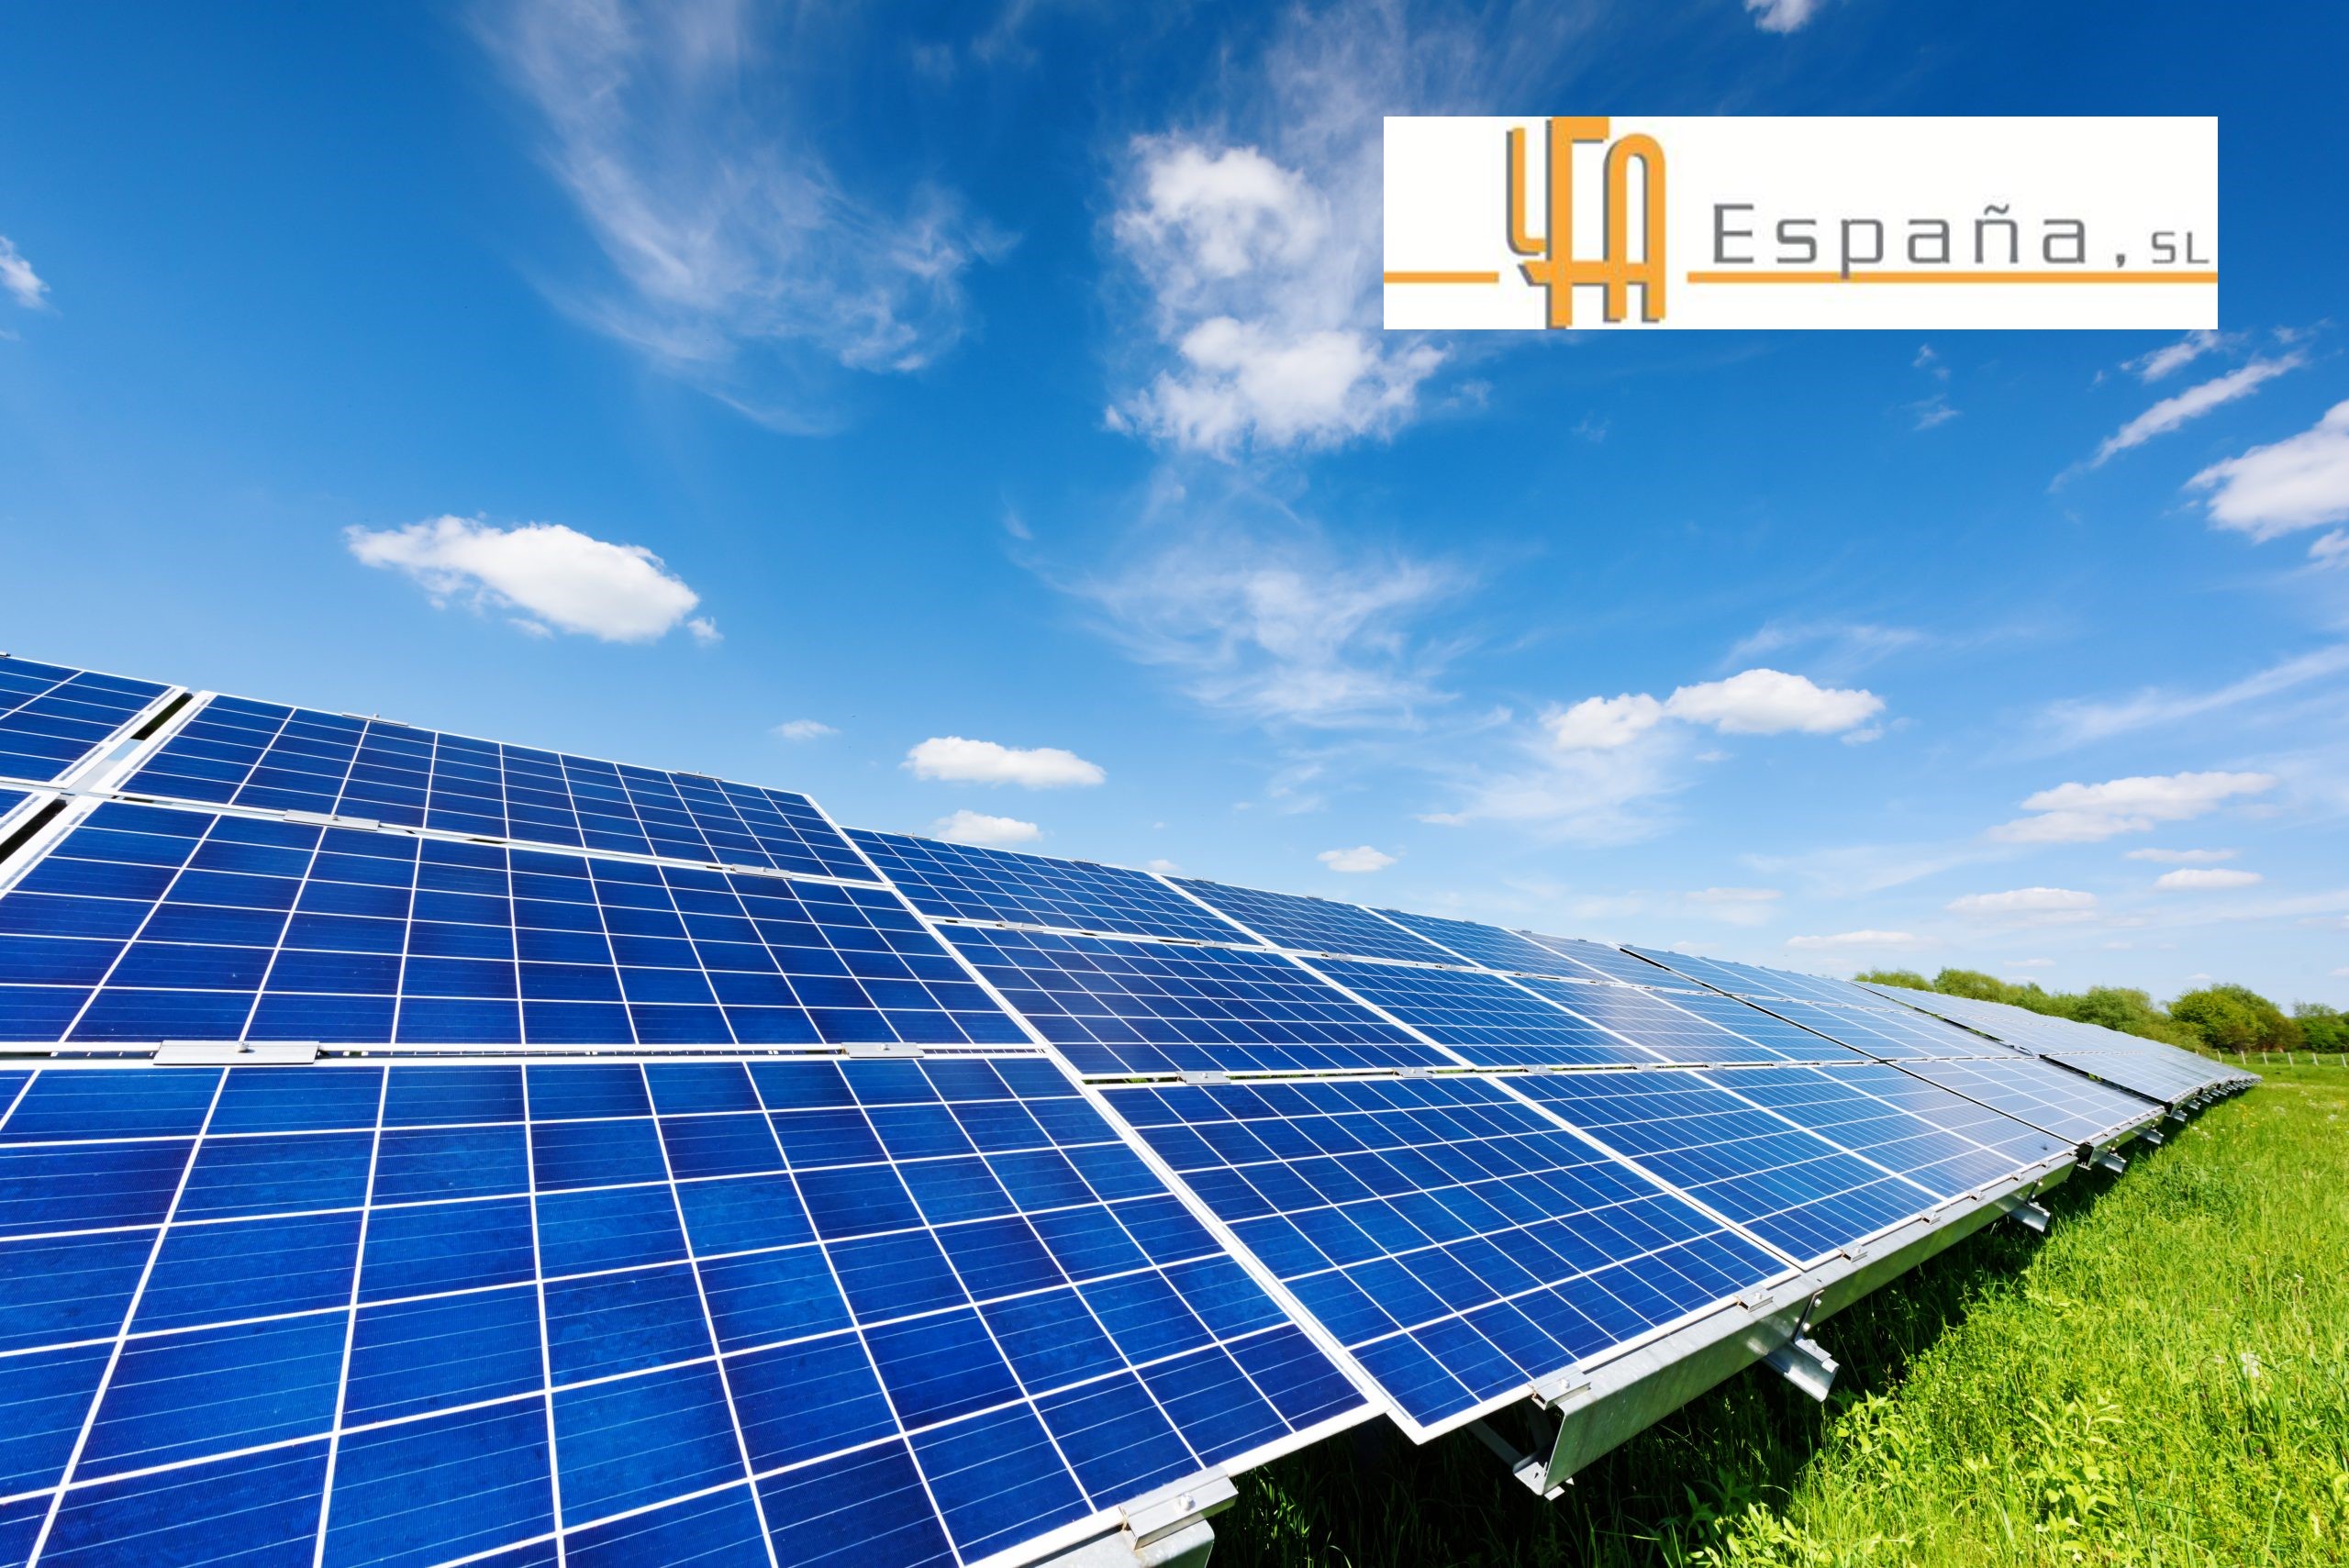 LFA ESPANA is involved in green energy